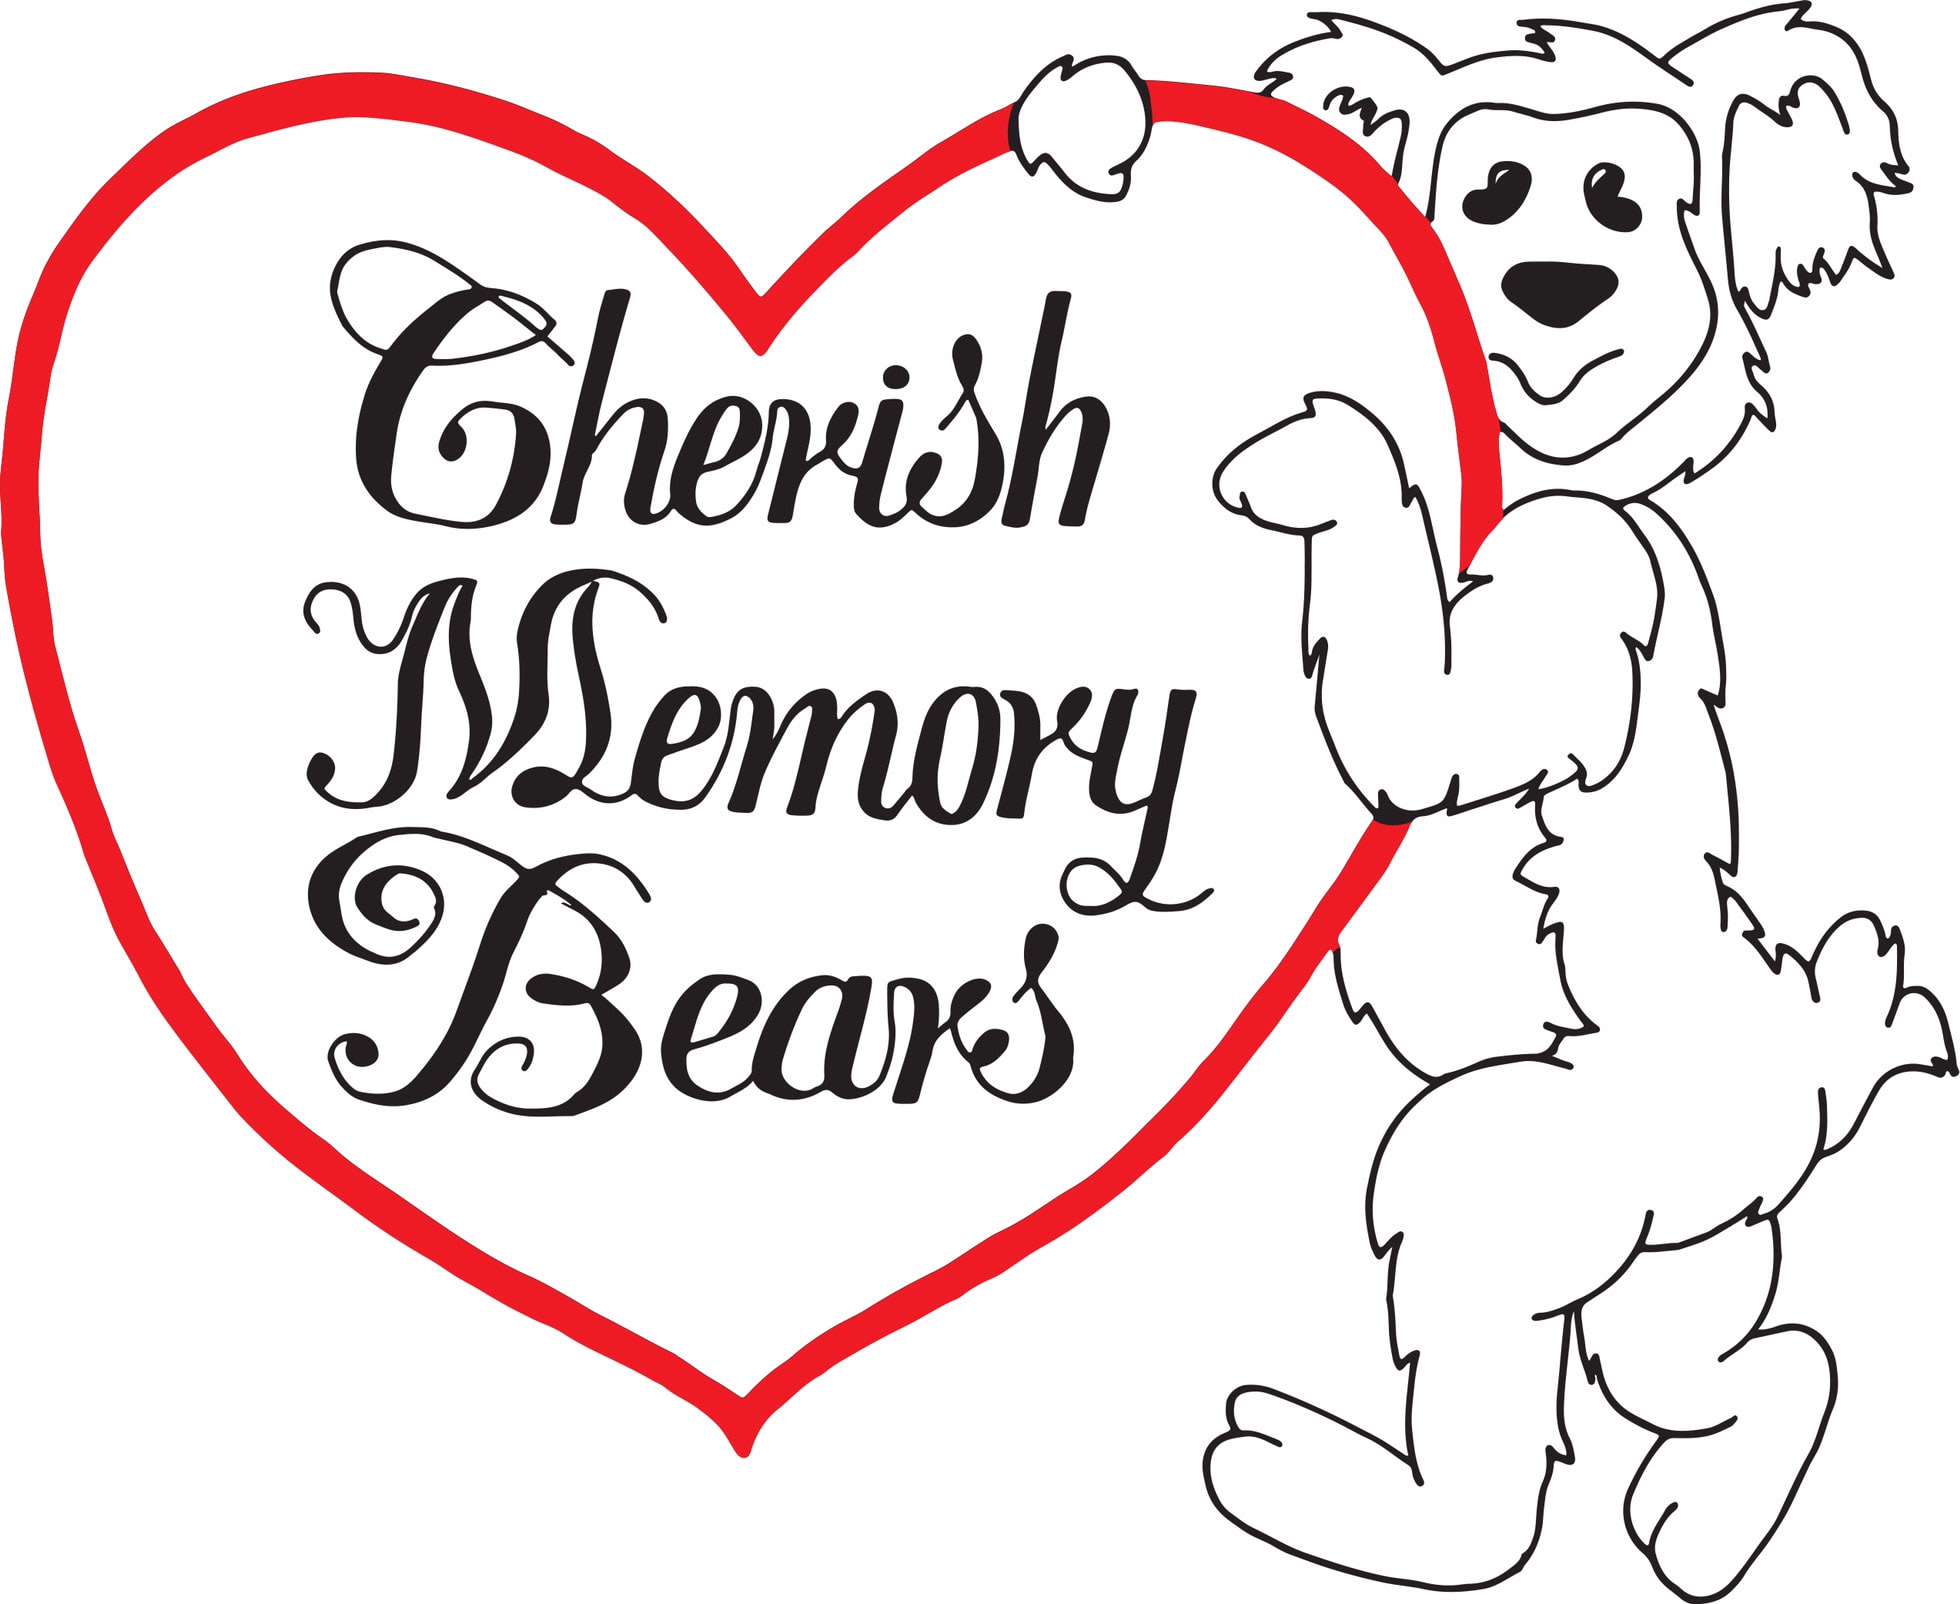 Cherish Memory Bears